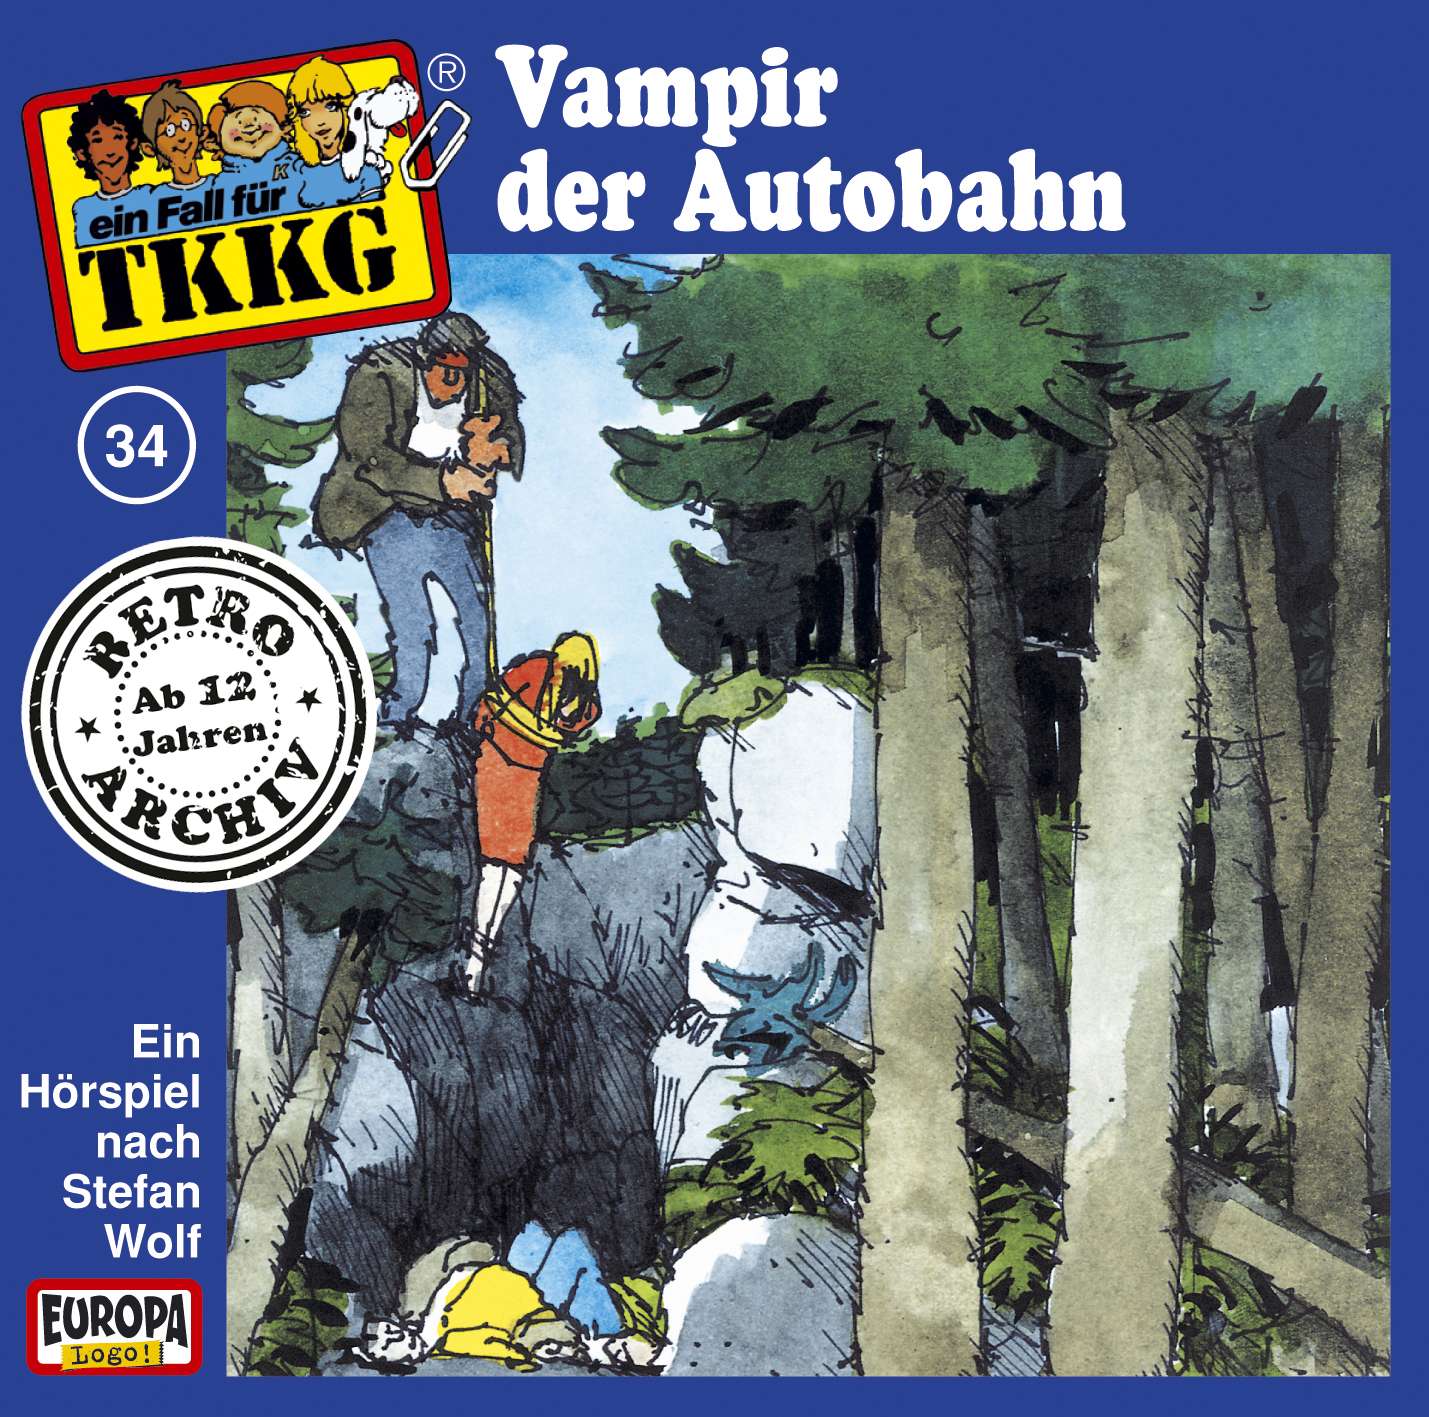 TKKG Retro-Archiv - Vampir der Autobahn